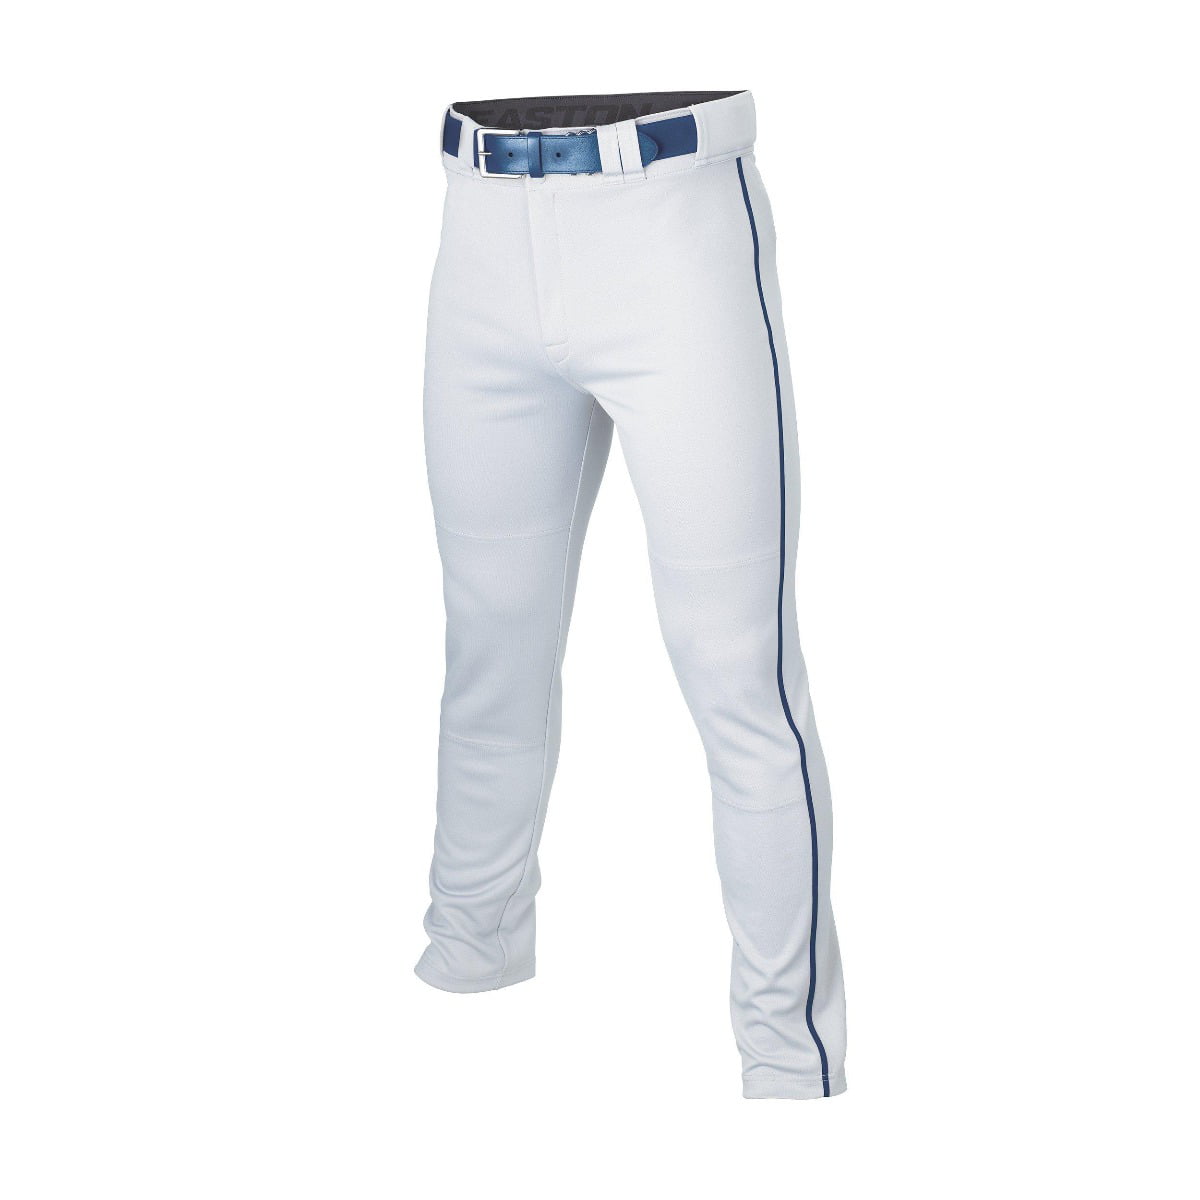 Size X Large Easton TSA Adult Deluxe Men's Adult Baseball Pant White 